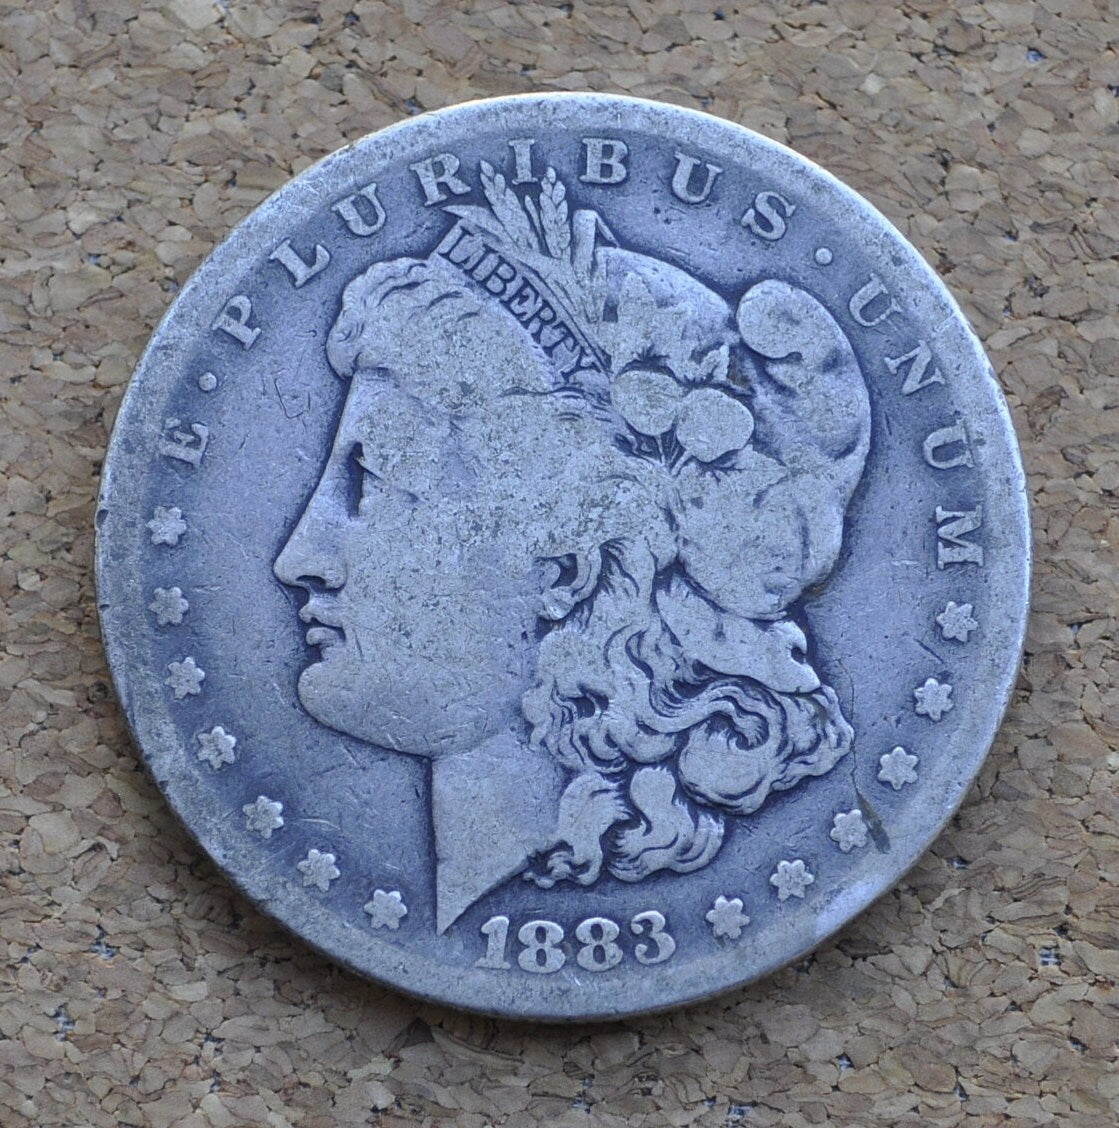 1883-S Morgan Silver Dollar - VG (Very Good) Grade / Condition - San Francisco Mint - 1883 S Morgan Dollar 1883 S Silver Dollar Better Date